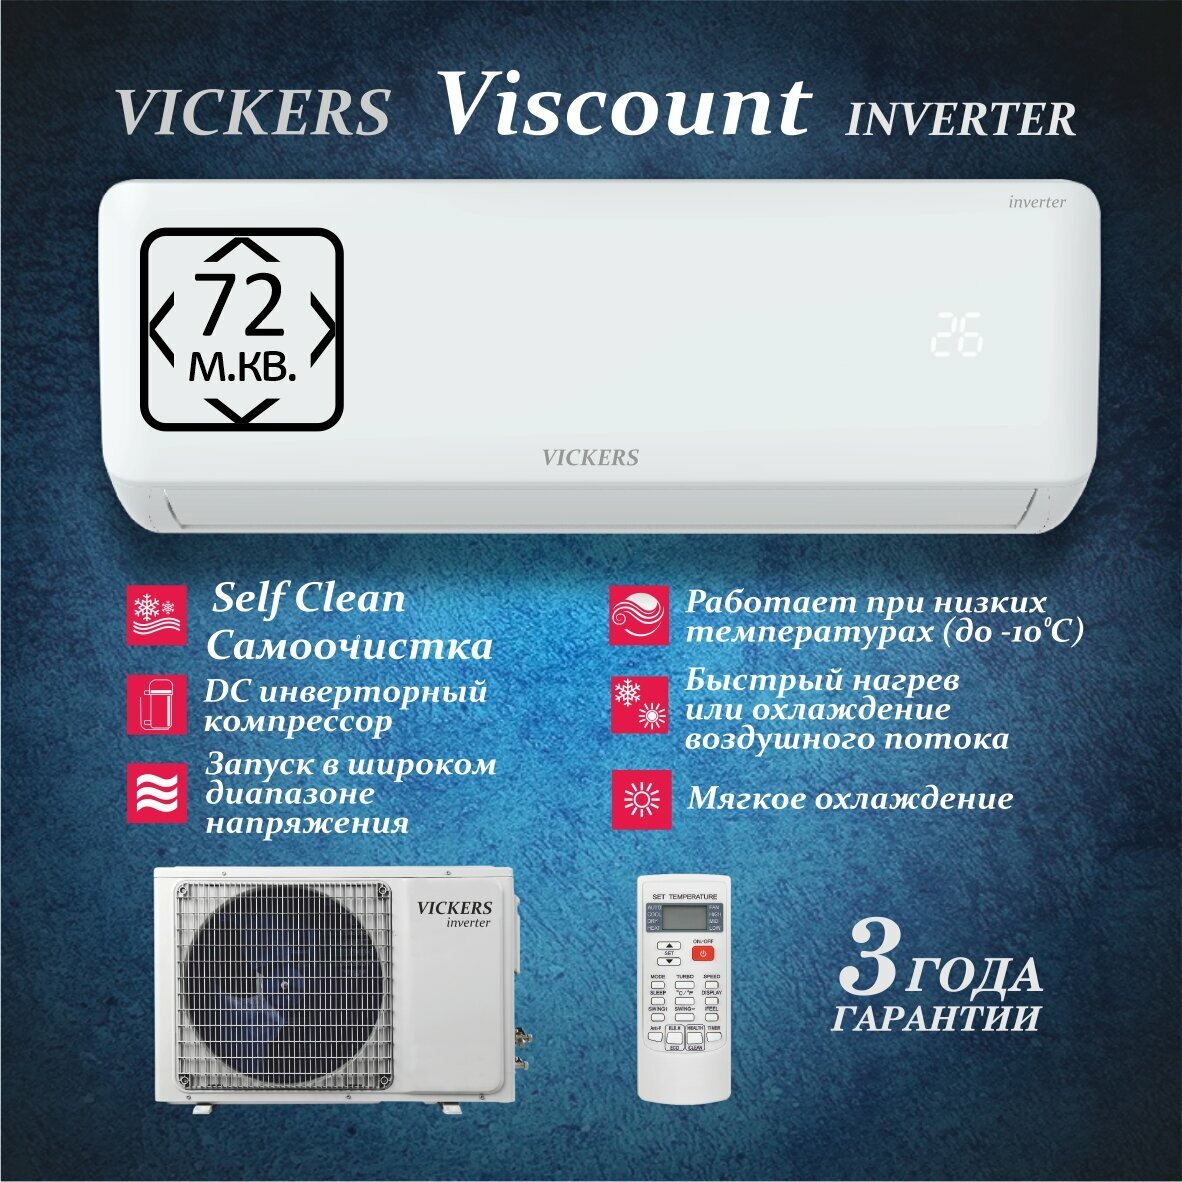 Сплит-система VICKERS VCI-A24HE Viscount Inverter кондиционер до 72 кв м